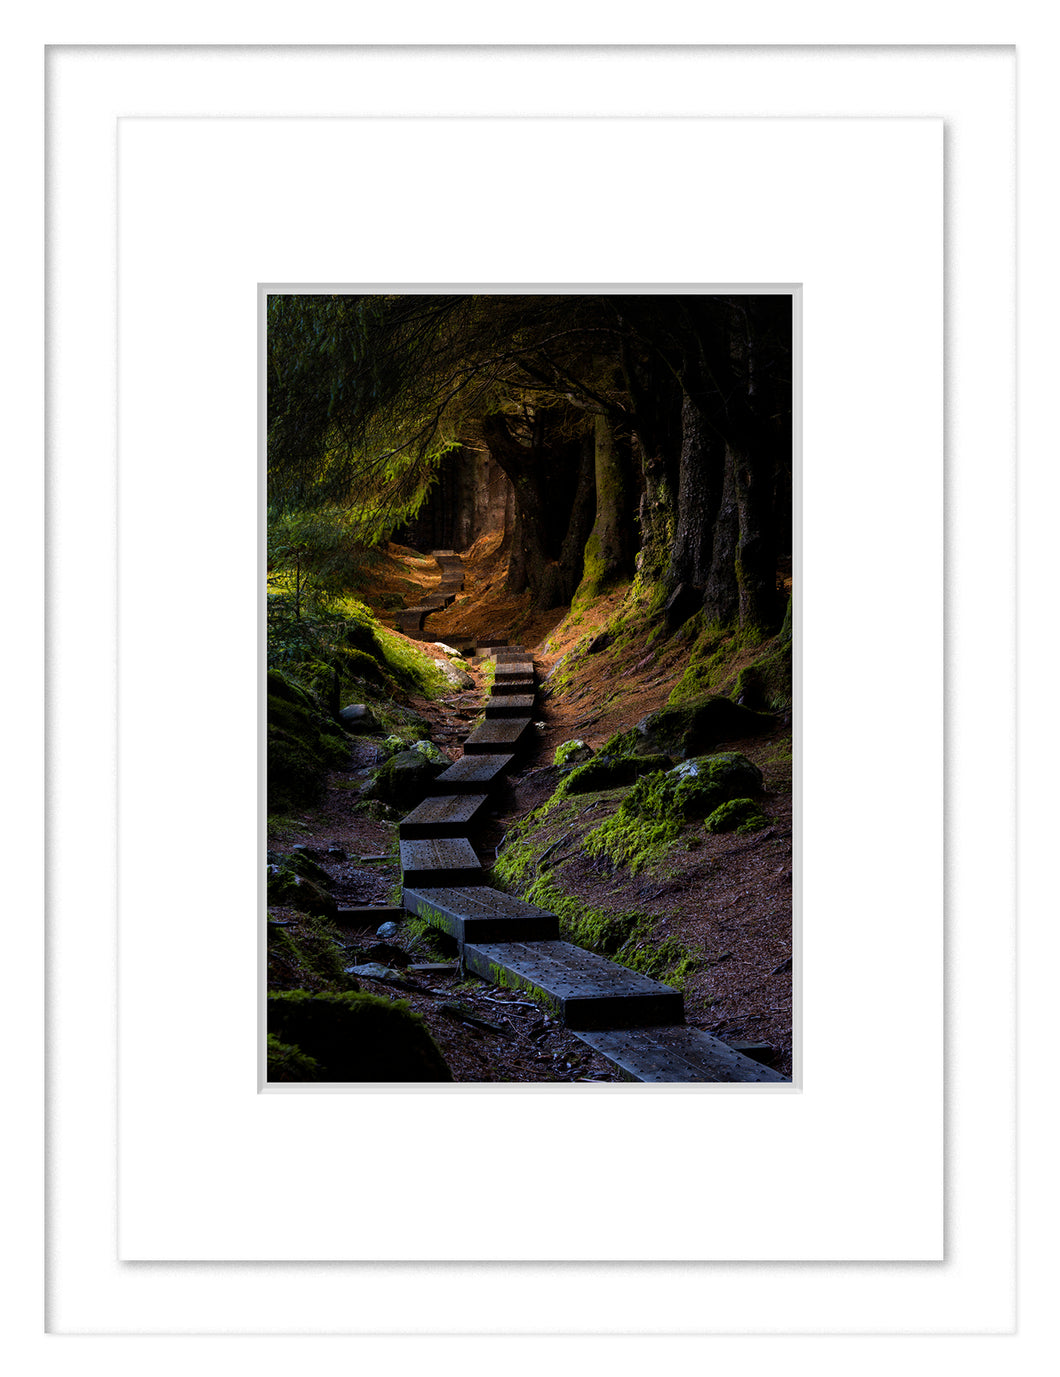 Balinastoe Light, Co. Wicklow - Framed A3 Print